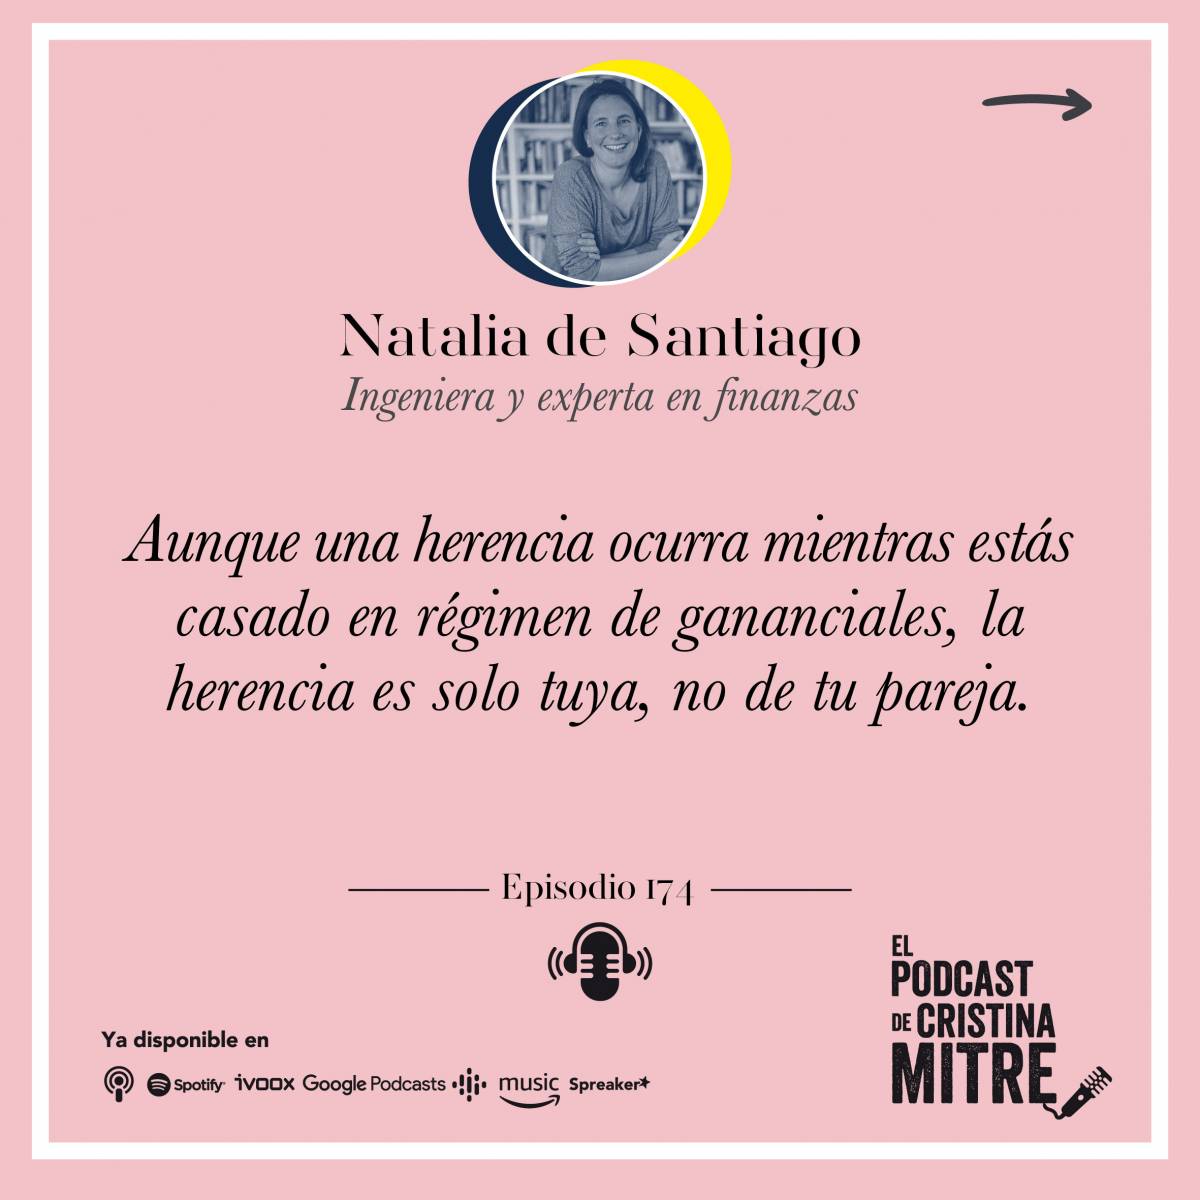 Cristina Mitre Natalia de Santiago herencias